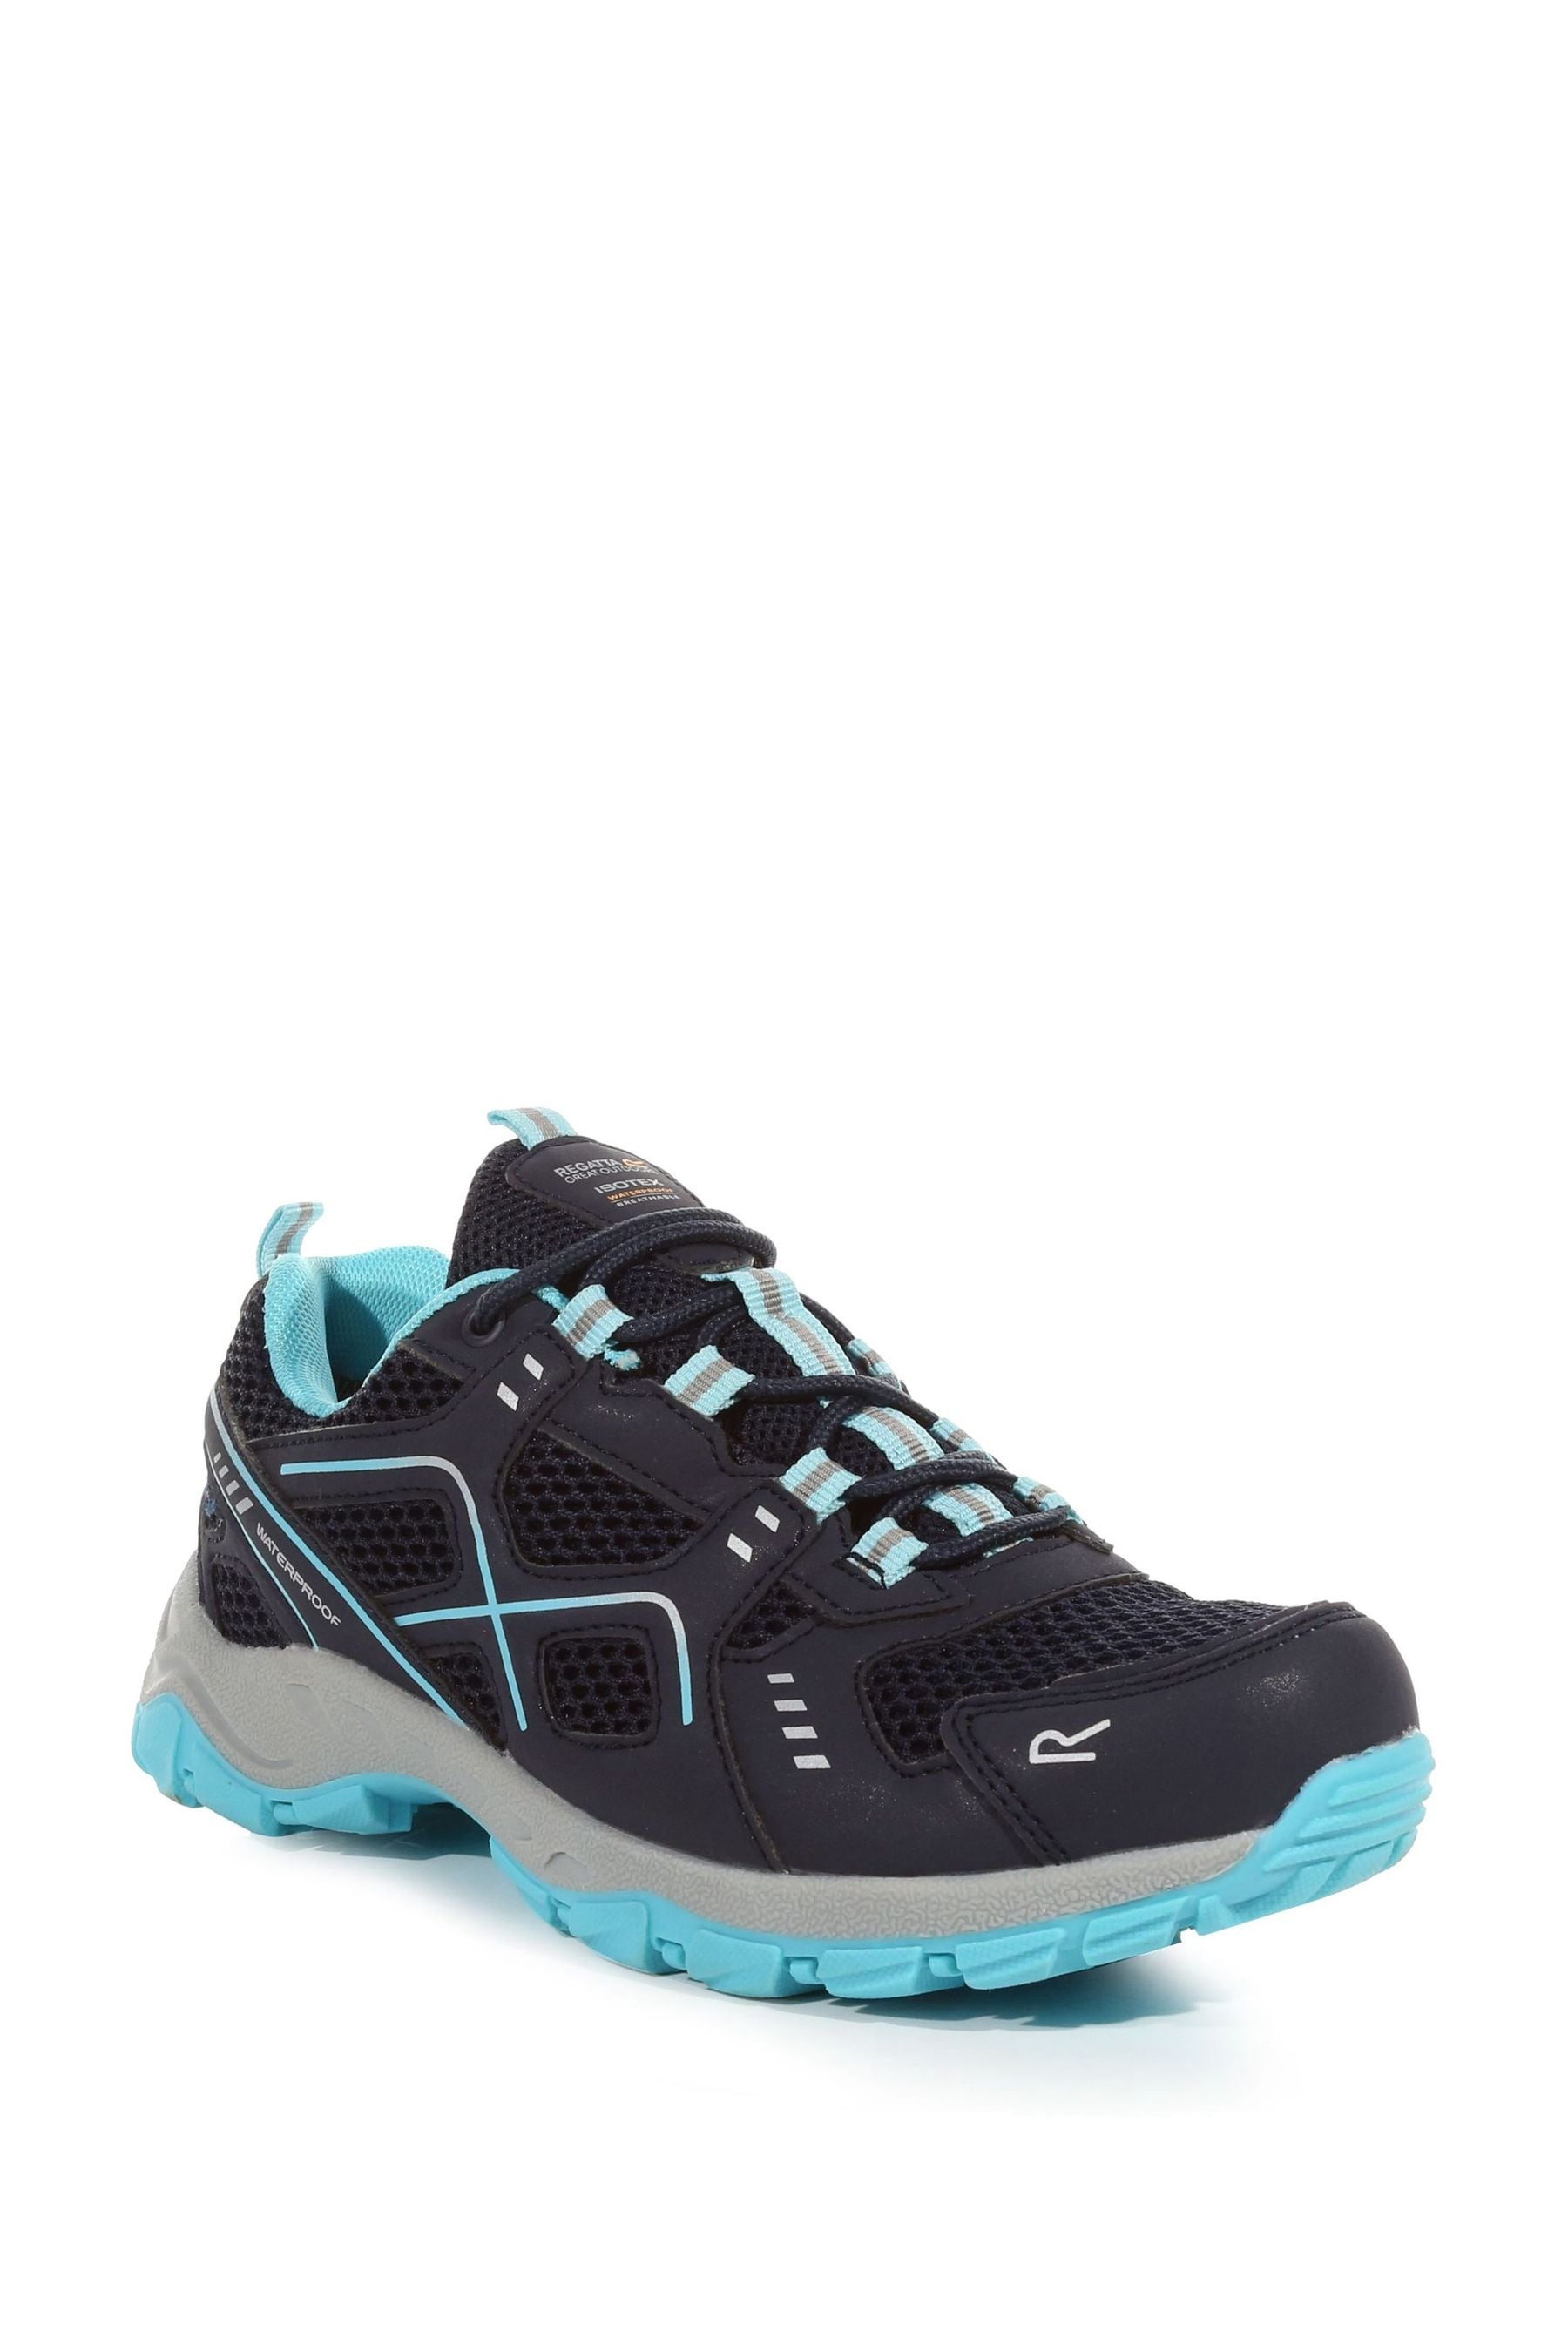 Buy Regatta Blue Womens Vendeavour Waterproof Walking Shoes from the ...